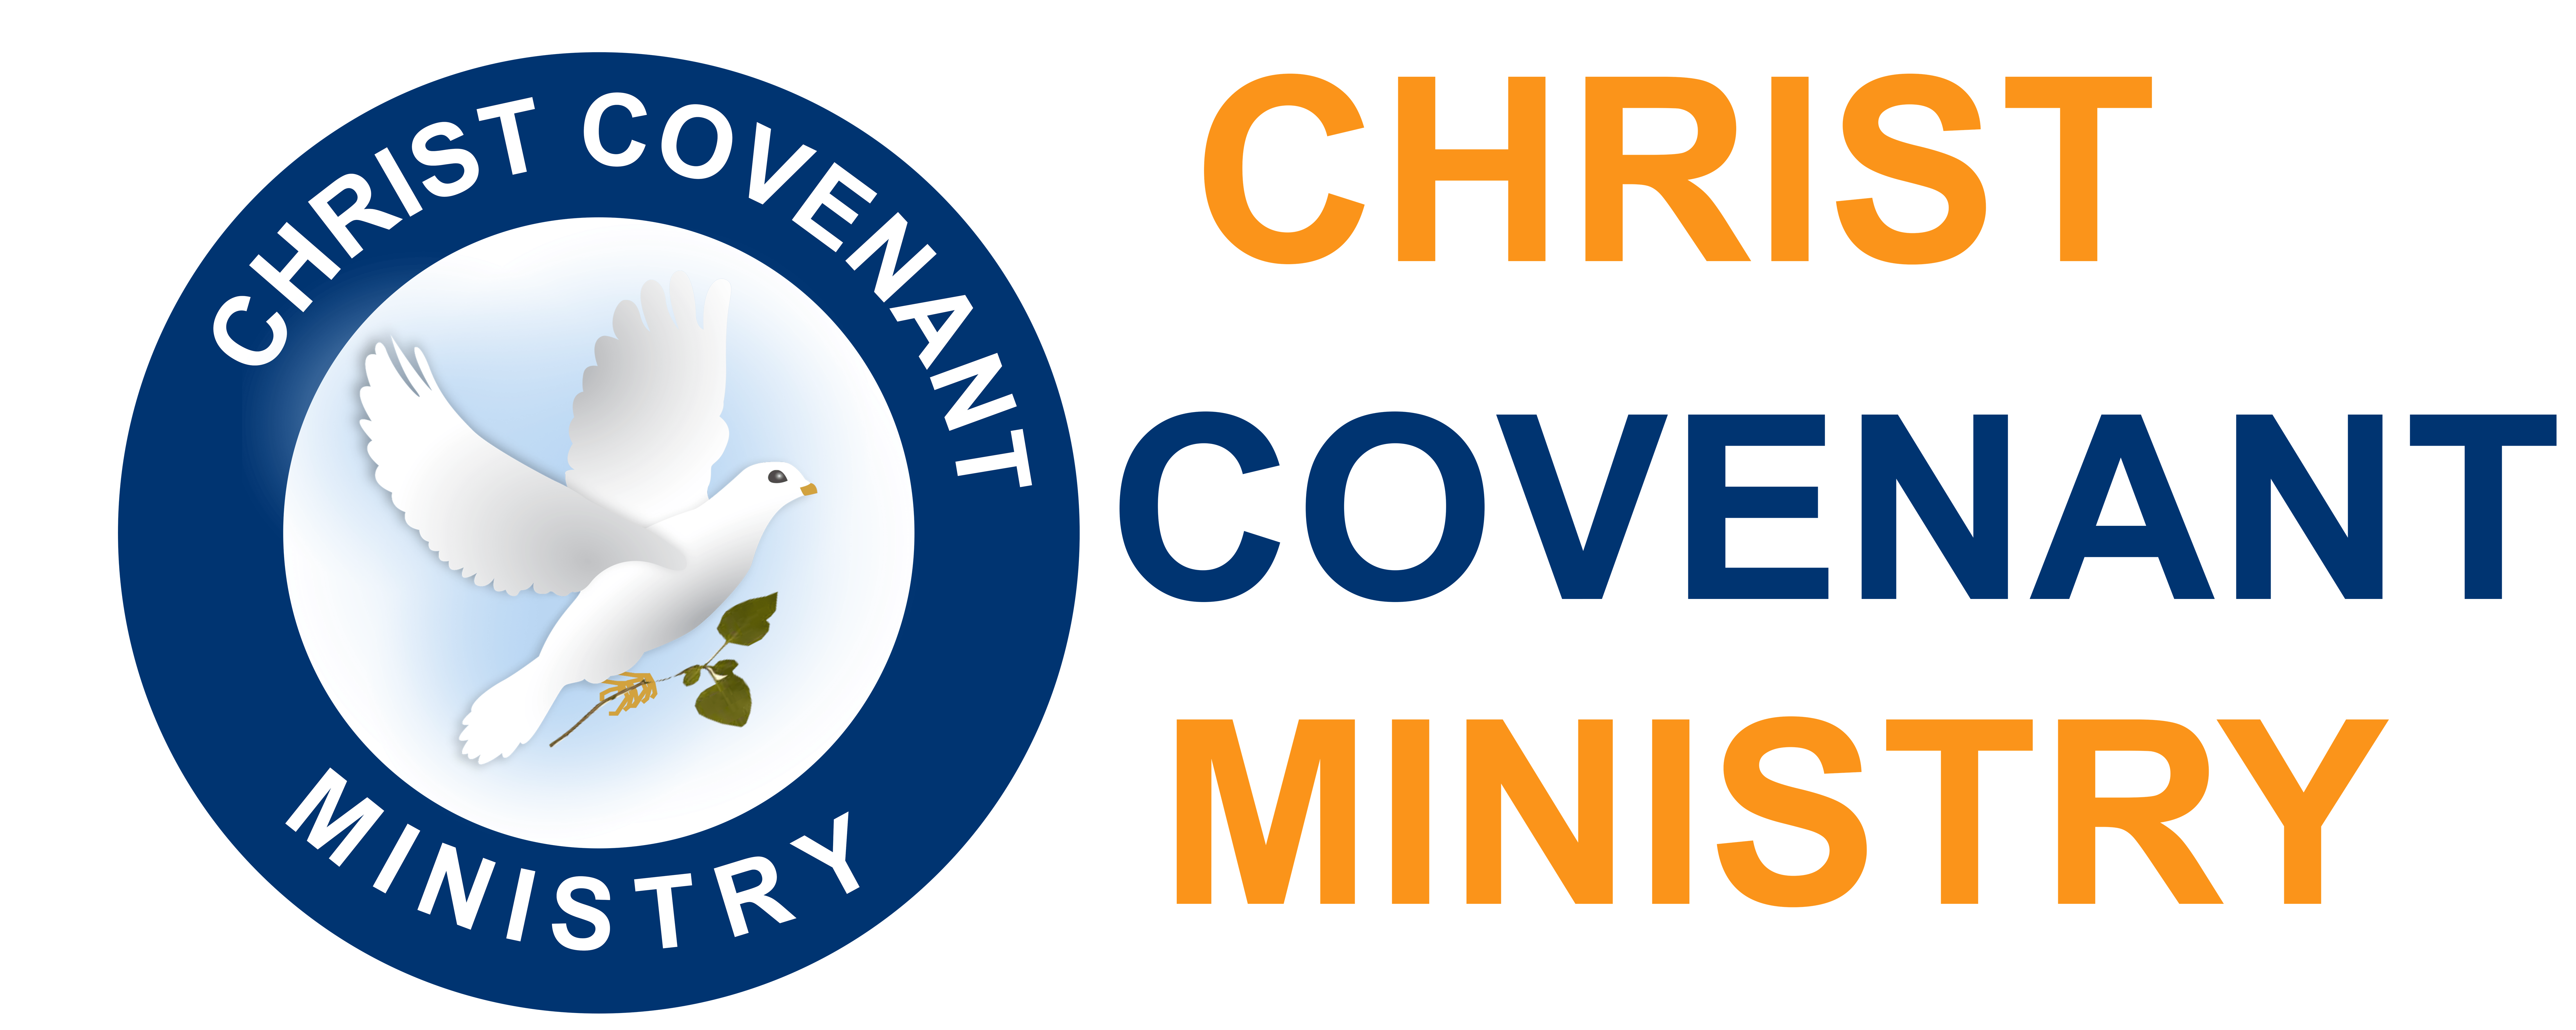 Christ Covenant ministry